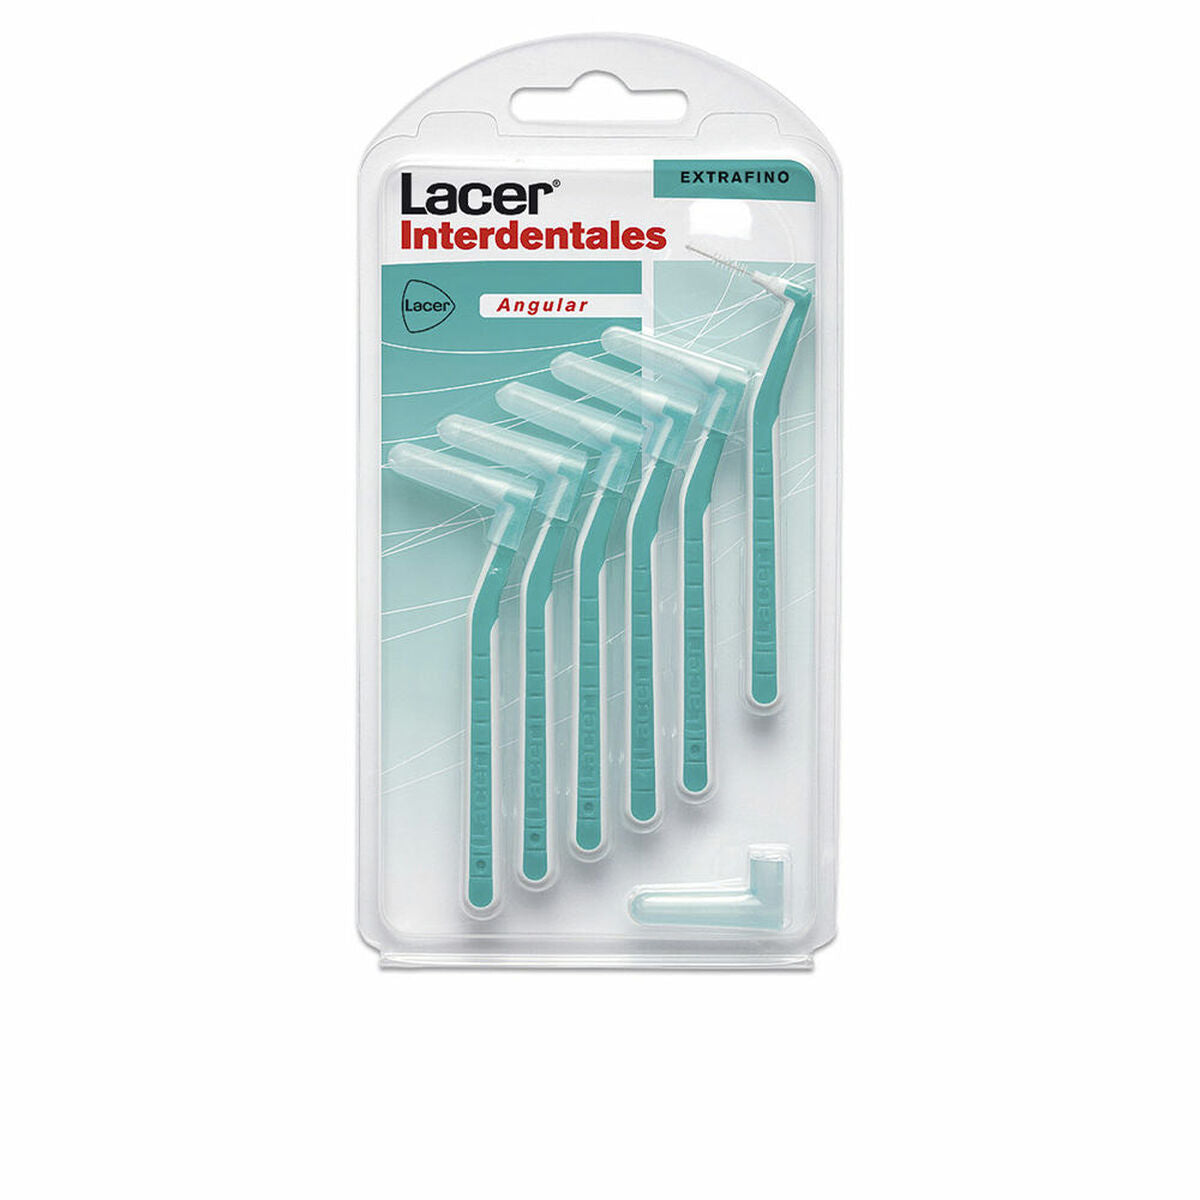 Lacer interdental de dentes lacer angular extra-fino (6 unidades)